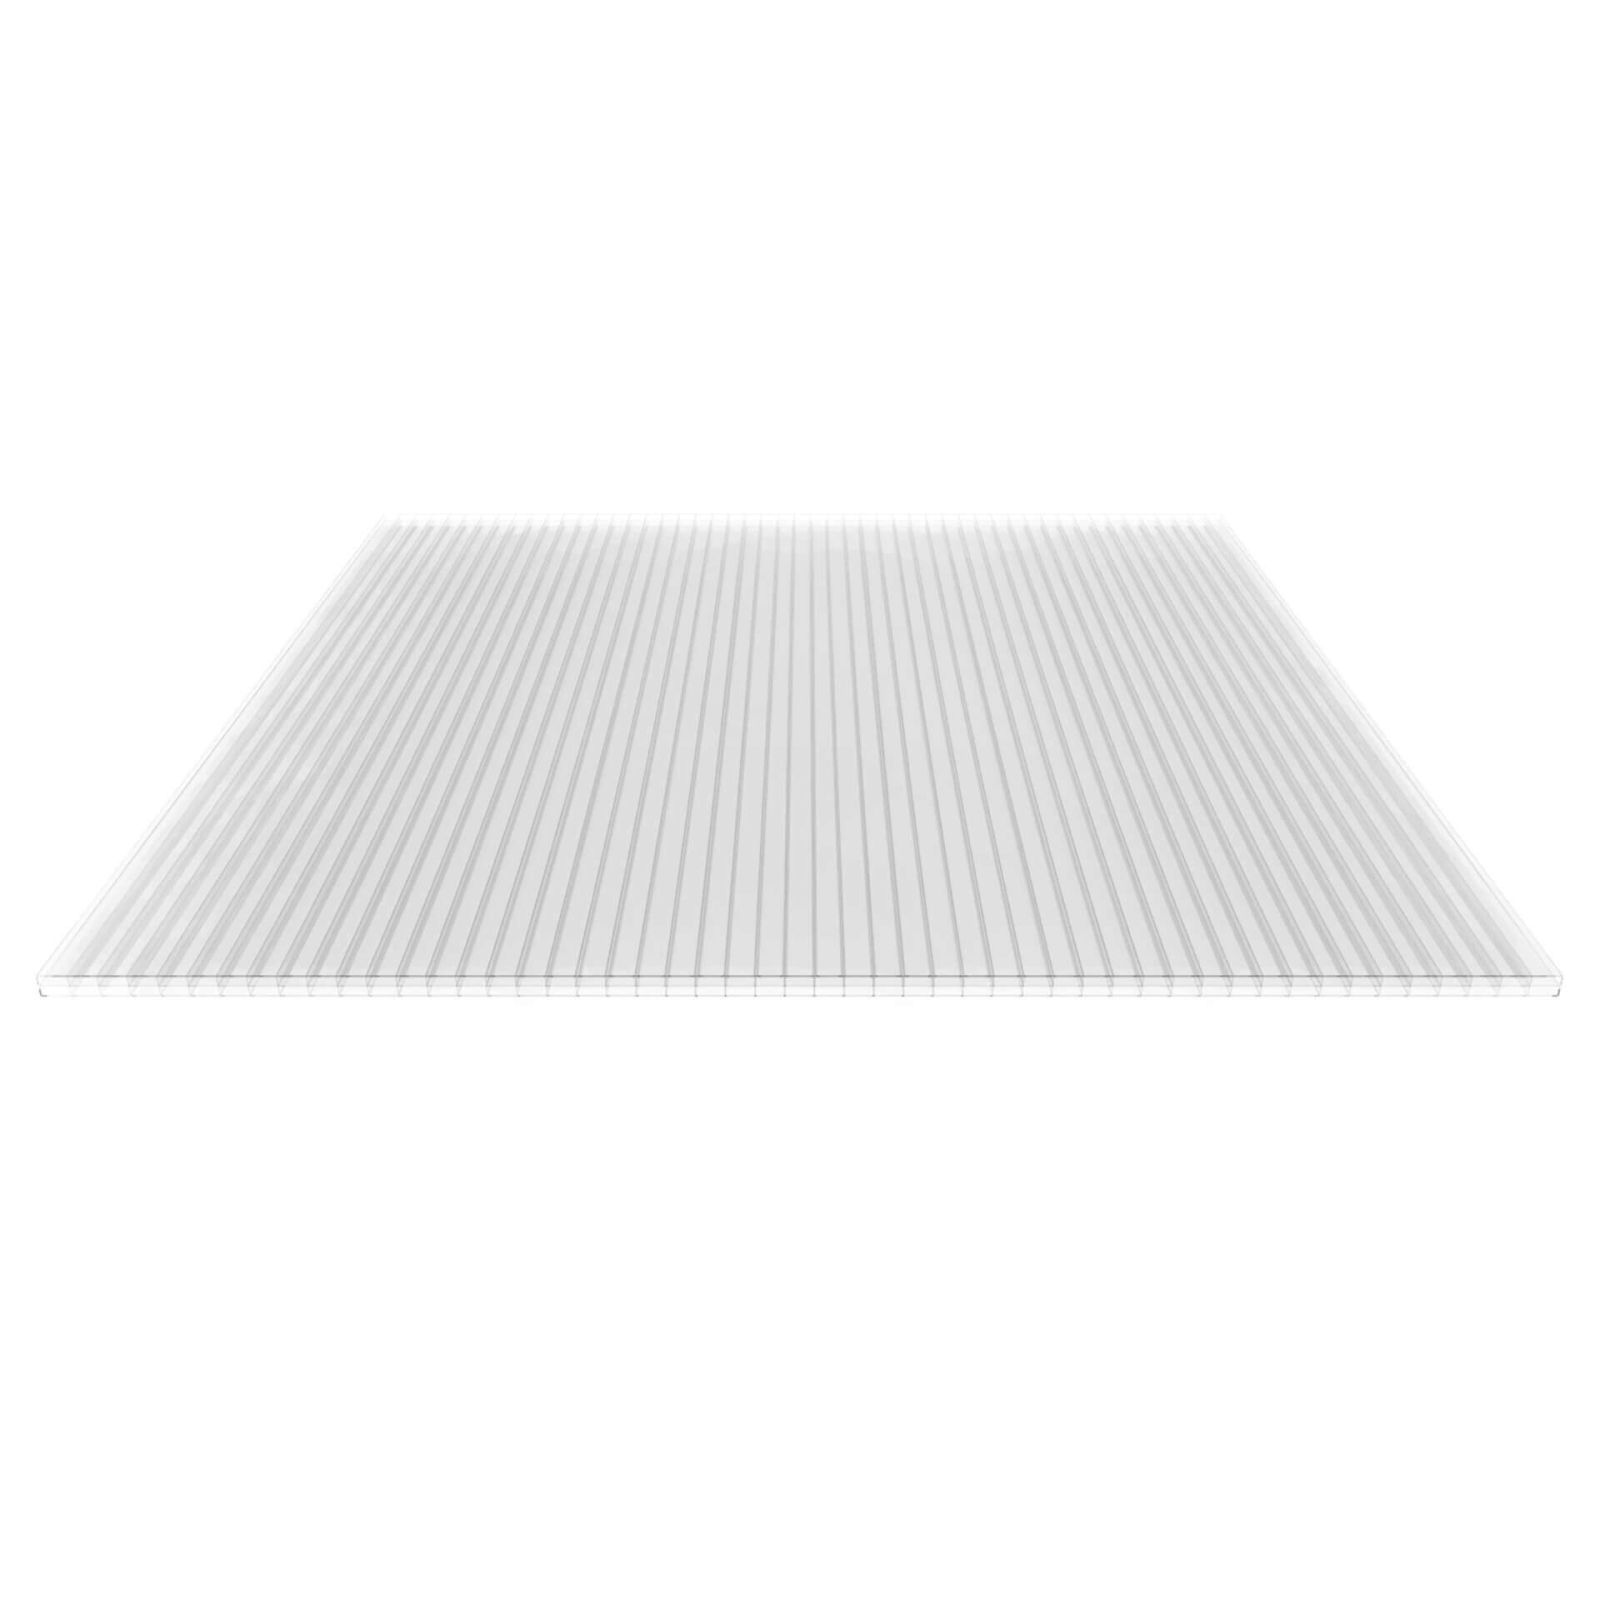 Polycarbonat Stegplatte | 16 mm | Breite 1200 mm | Klar | 500 mm